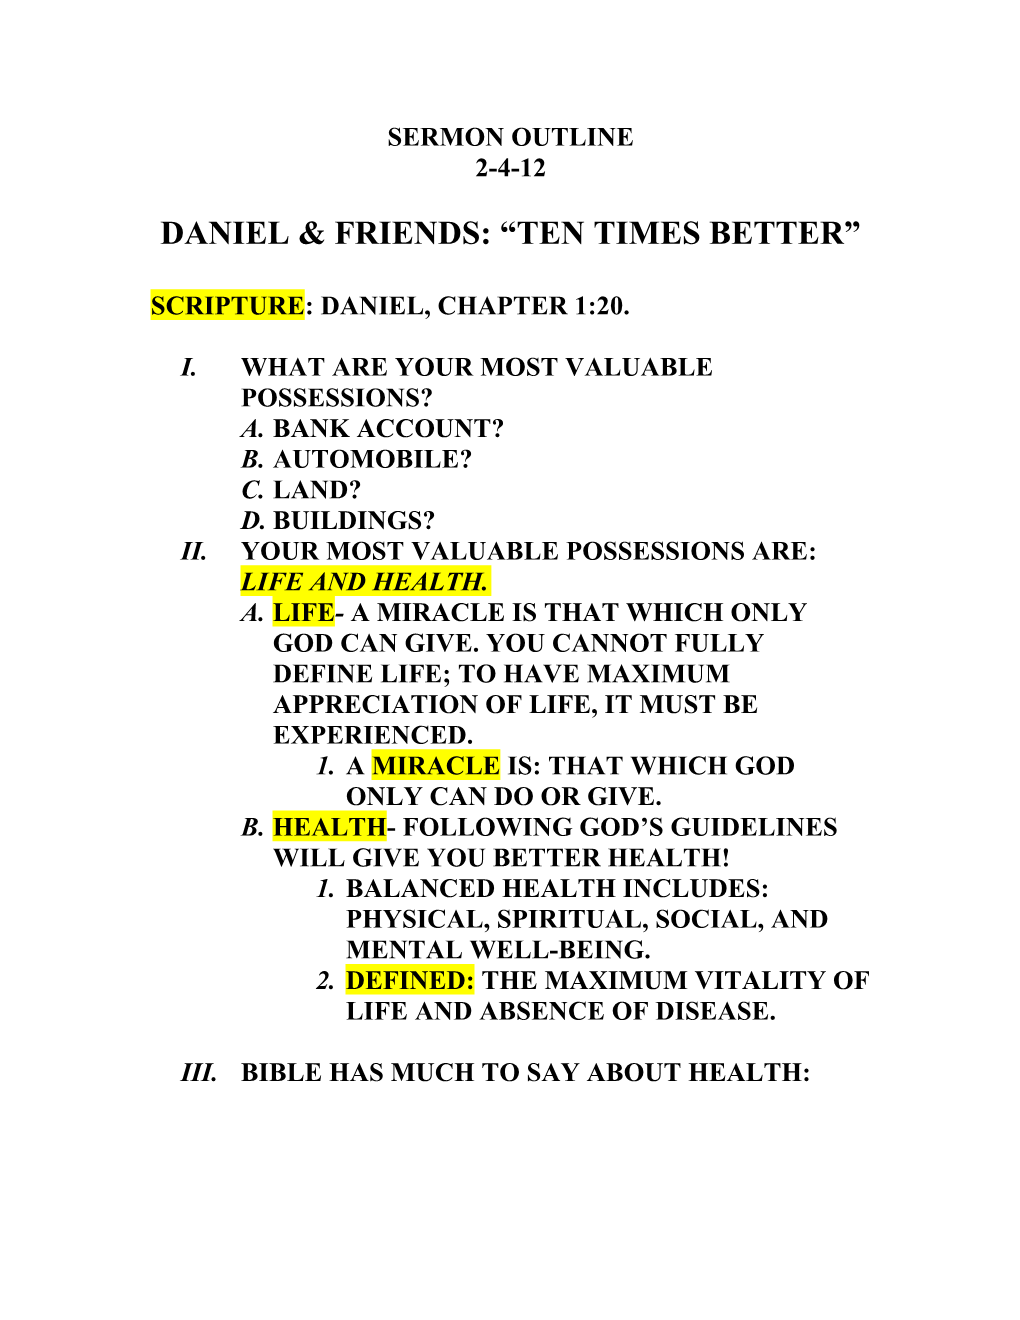 Daniel & Friends: Ten Times Better